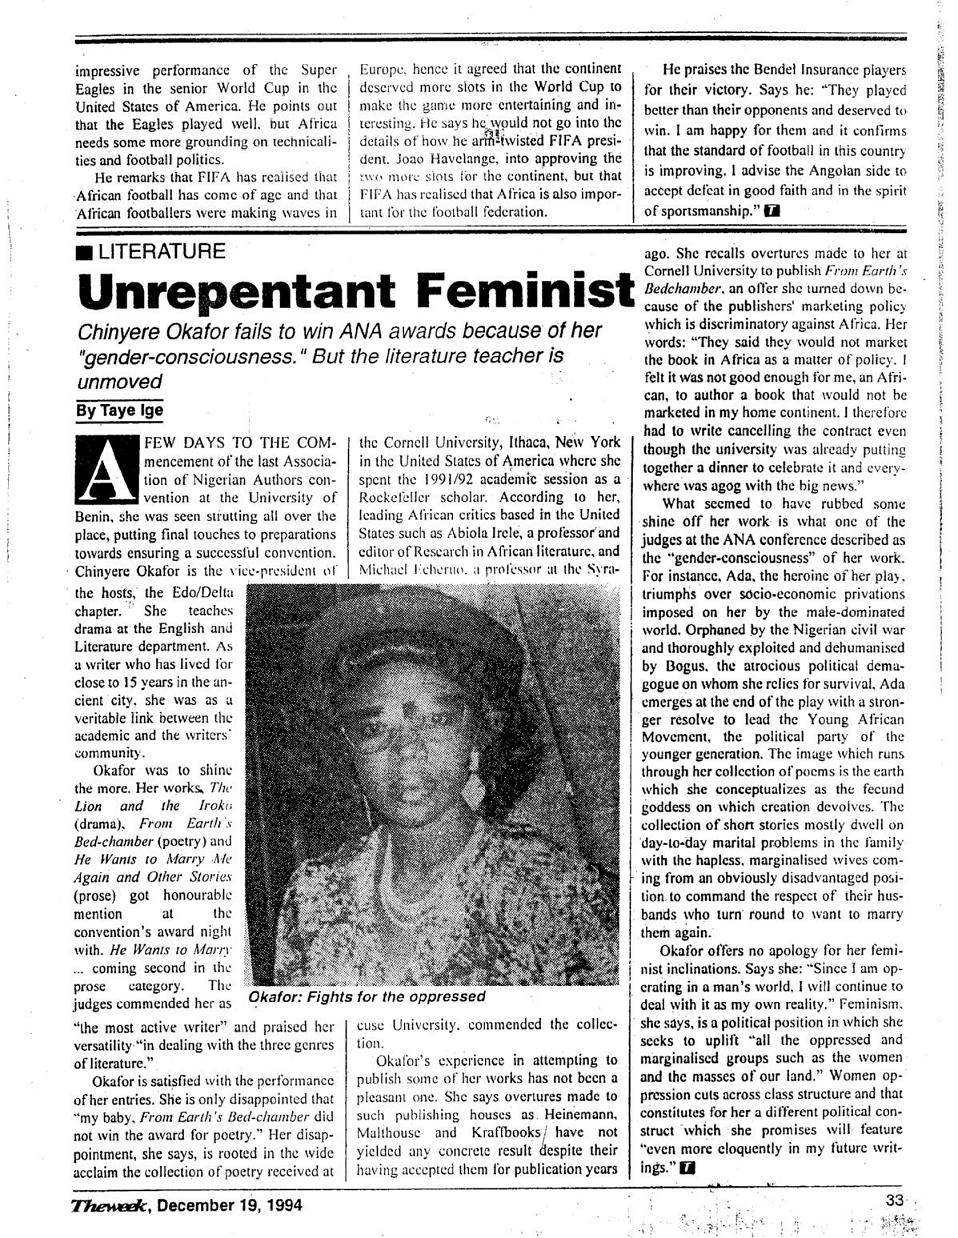 Unrepentant feminist page